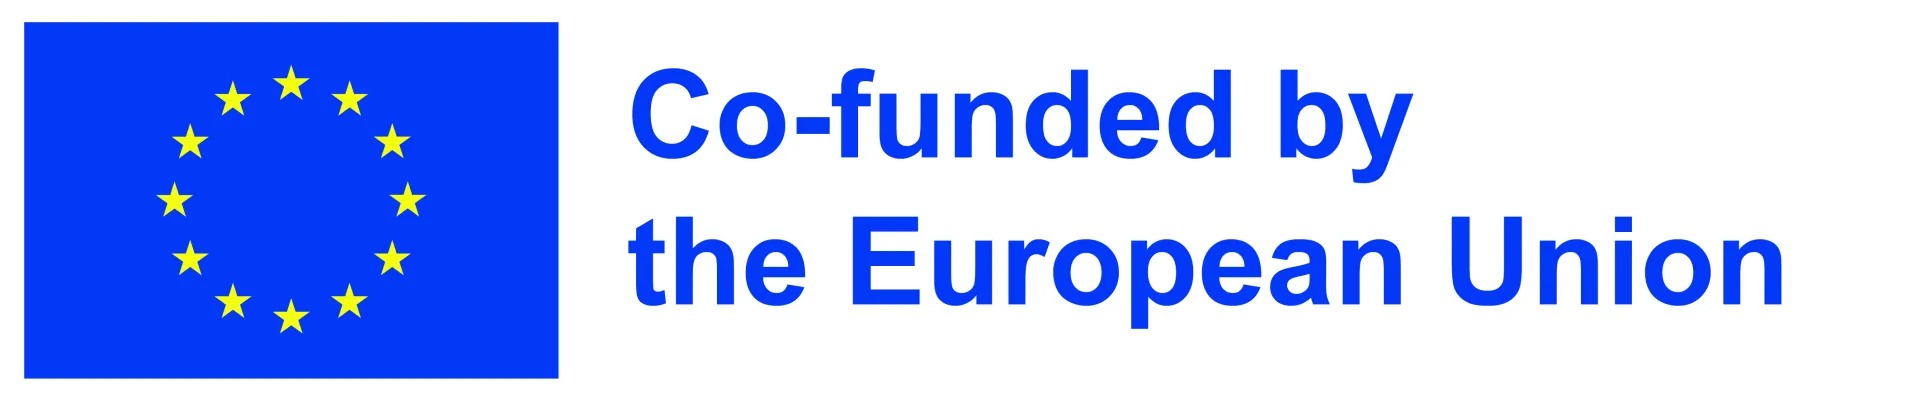 EN co-funded EU